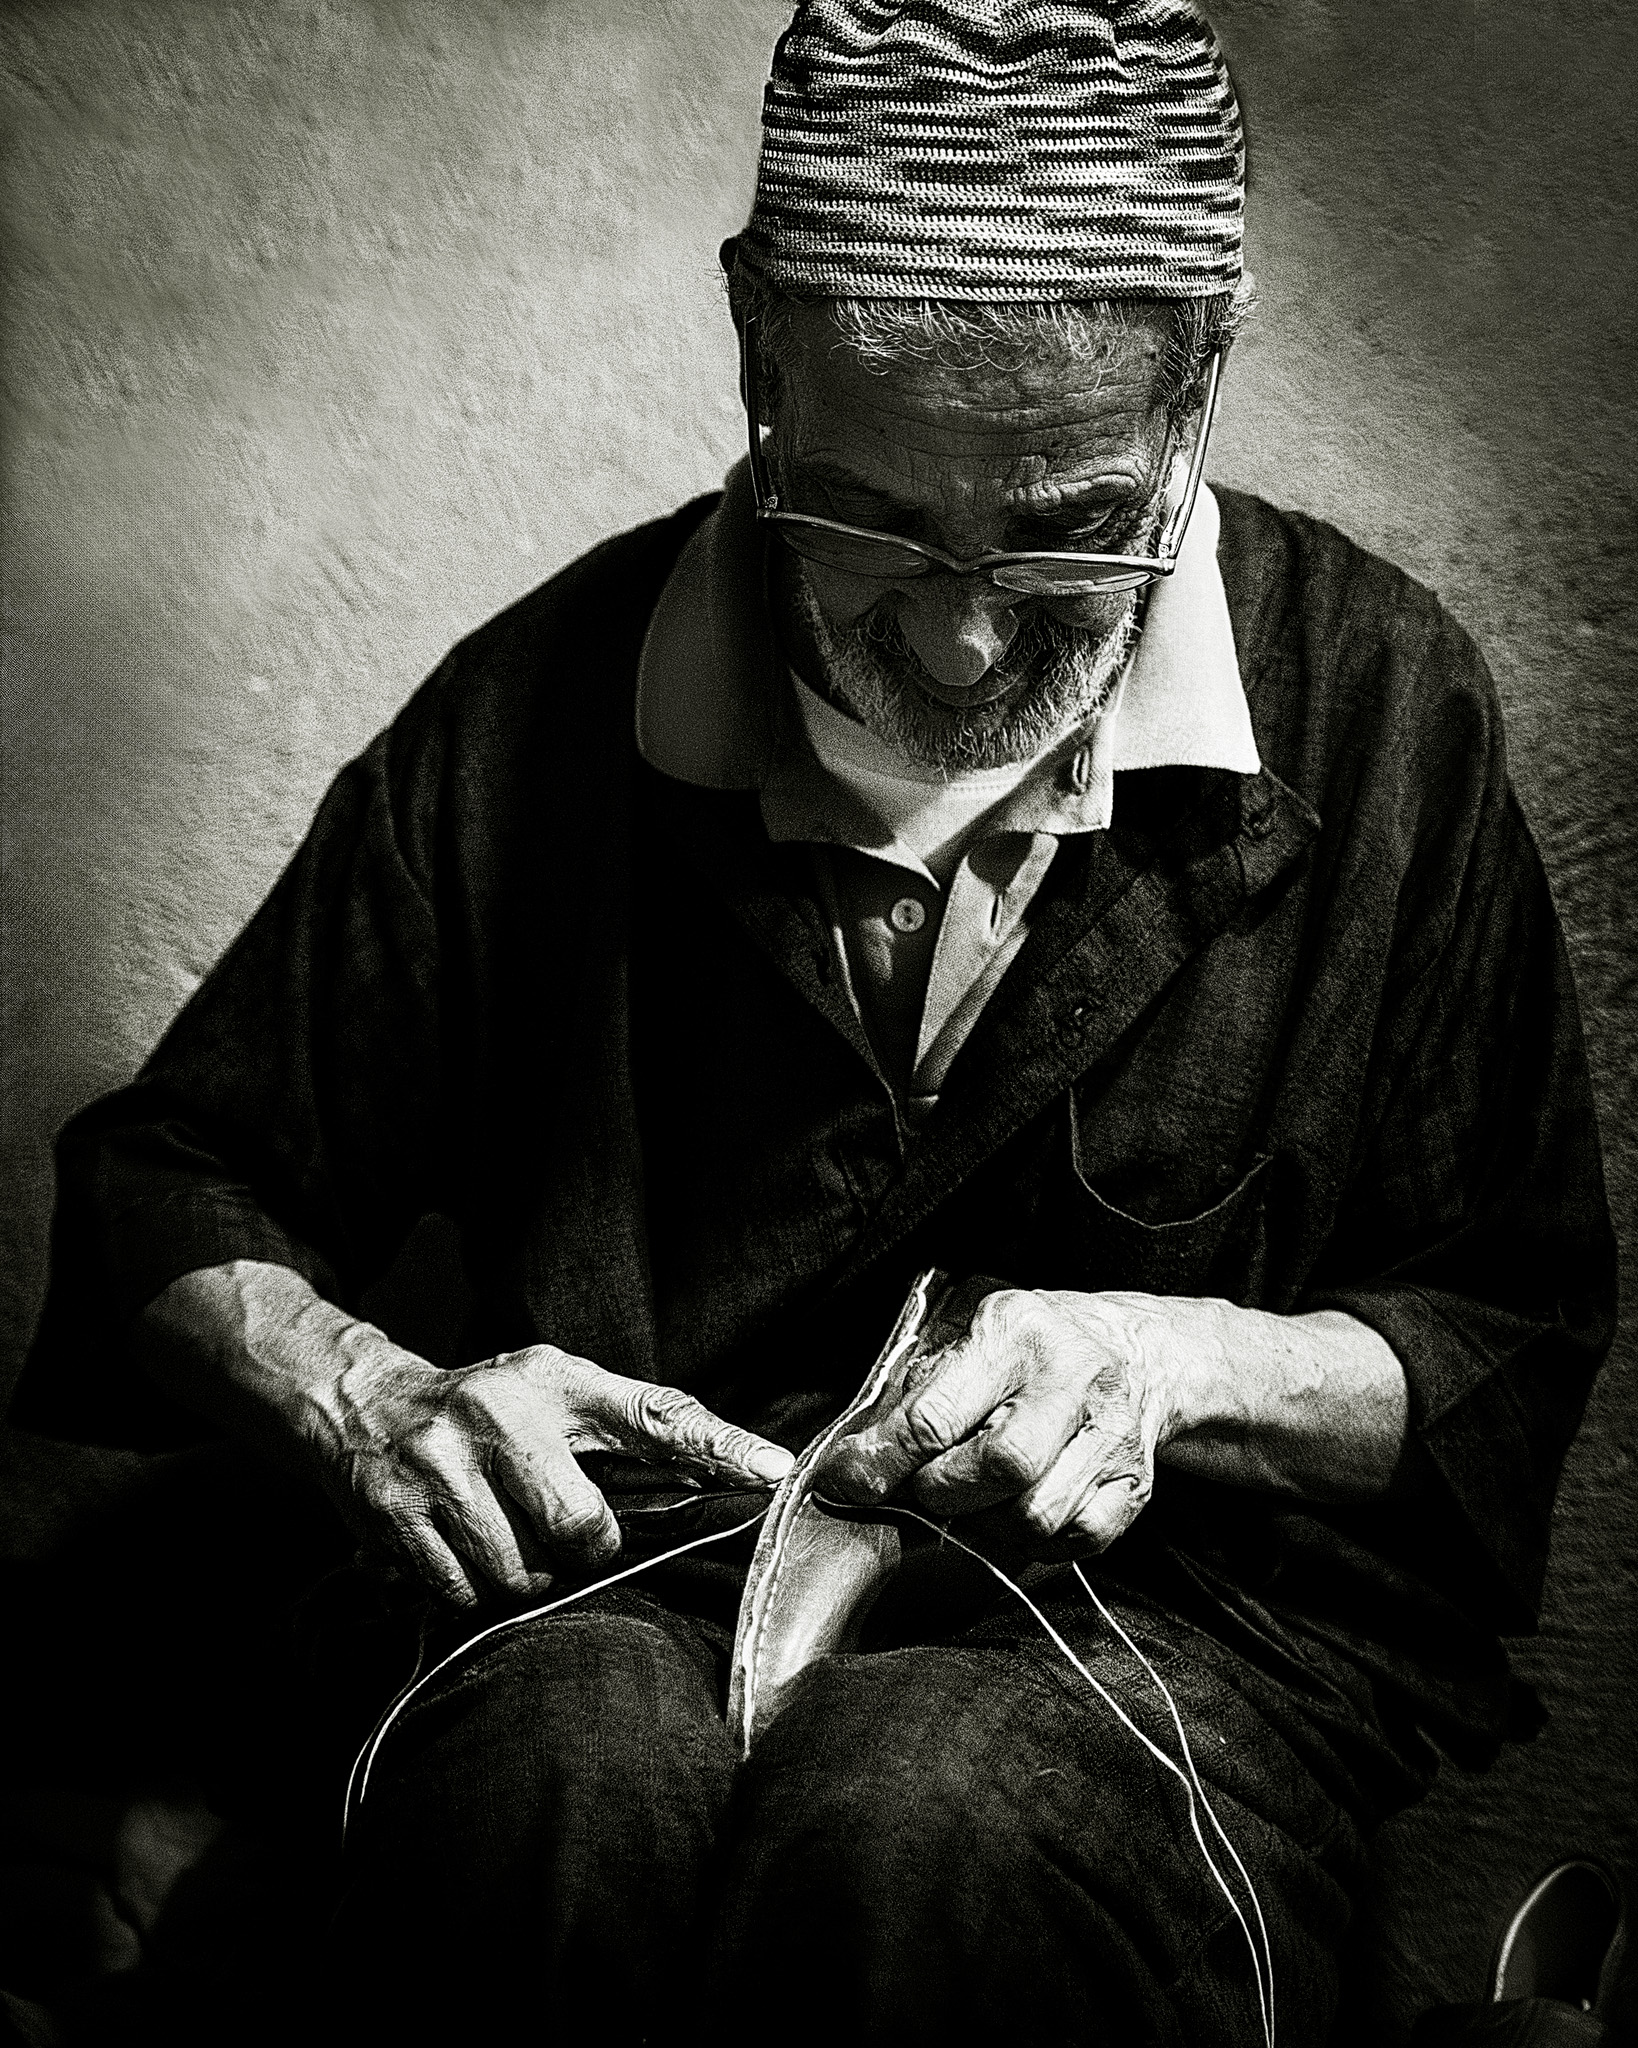 Marrakech Craftsman at work. ...